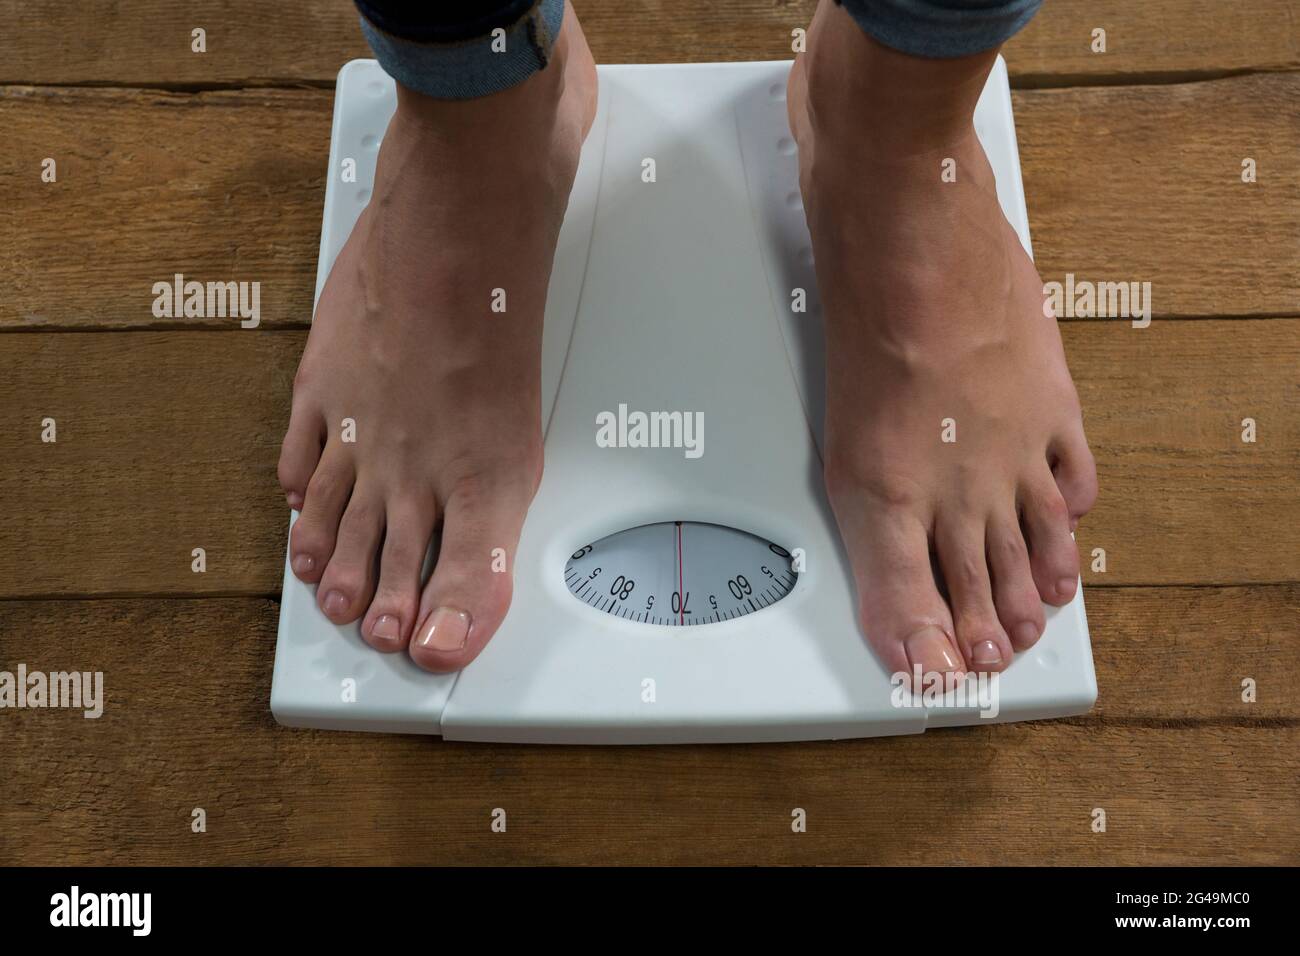 https://c8.alamy.com/comp/2G49MC0/woman-checking-her-weight-on-a-weighing-machine-2G49MC0.jpg